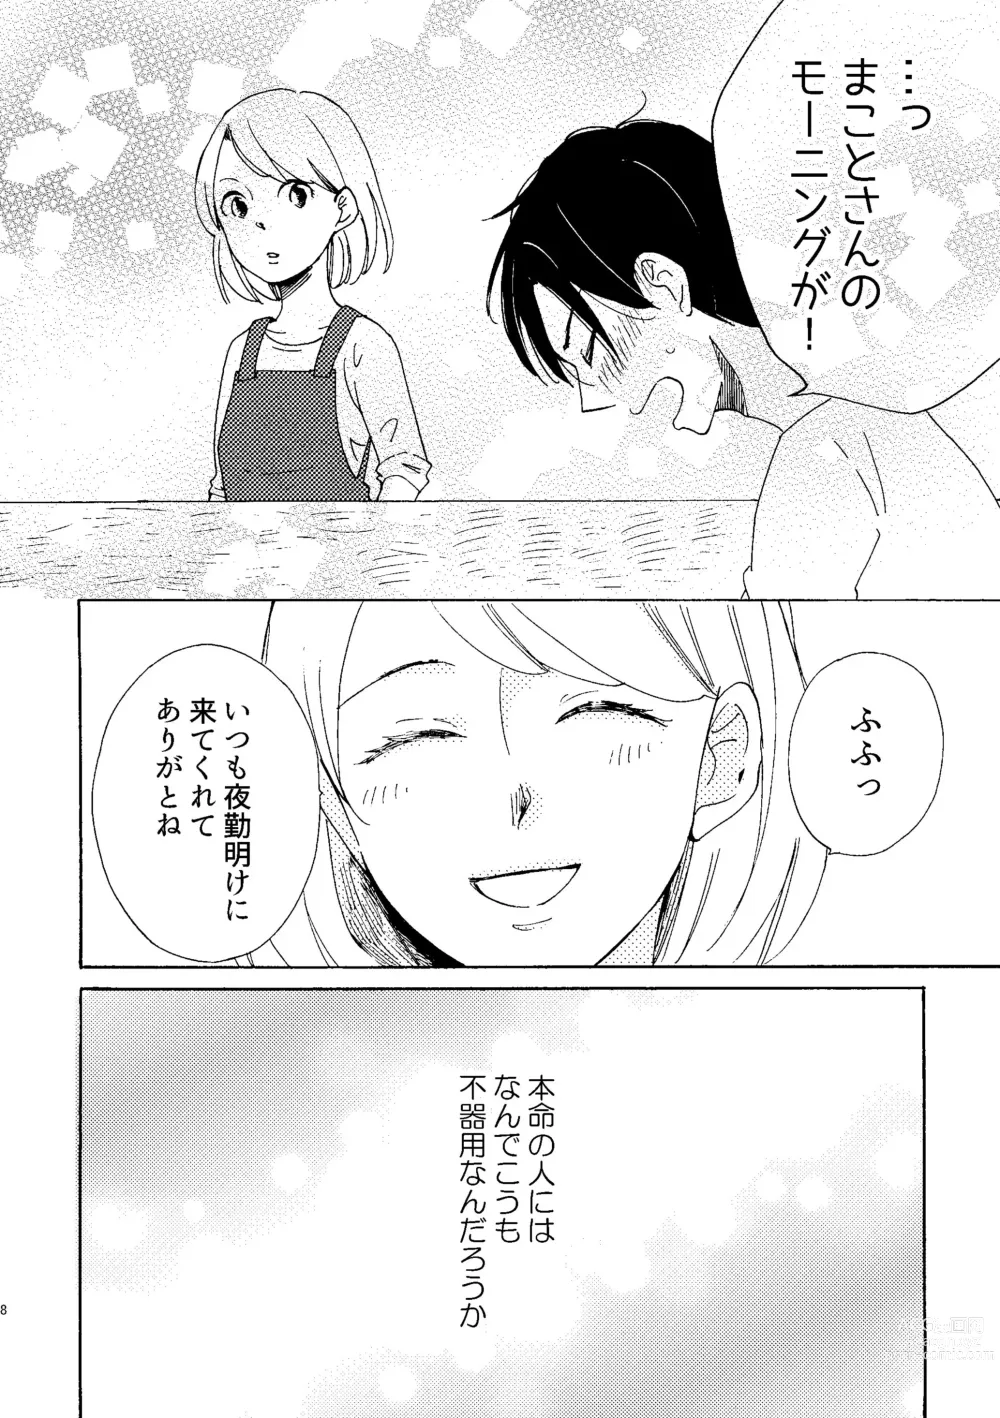 Page 8 of doujinshi Aoi-kun no Koi